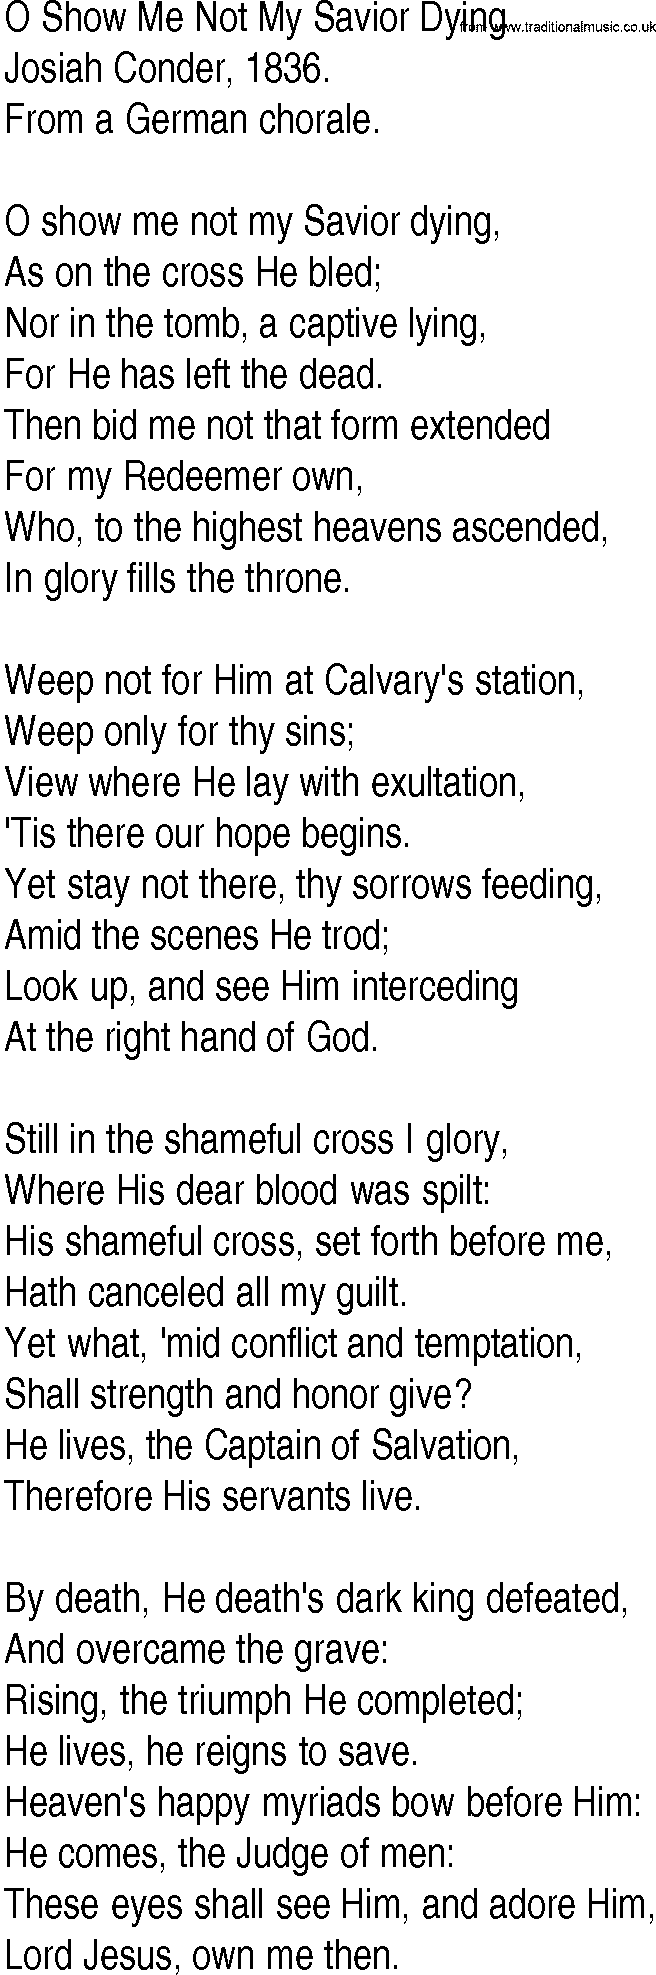 Hymn and Gospel Song: O Show Me Not My Savior Dying by Josiah Conder lyrics